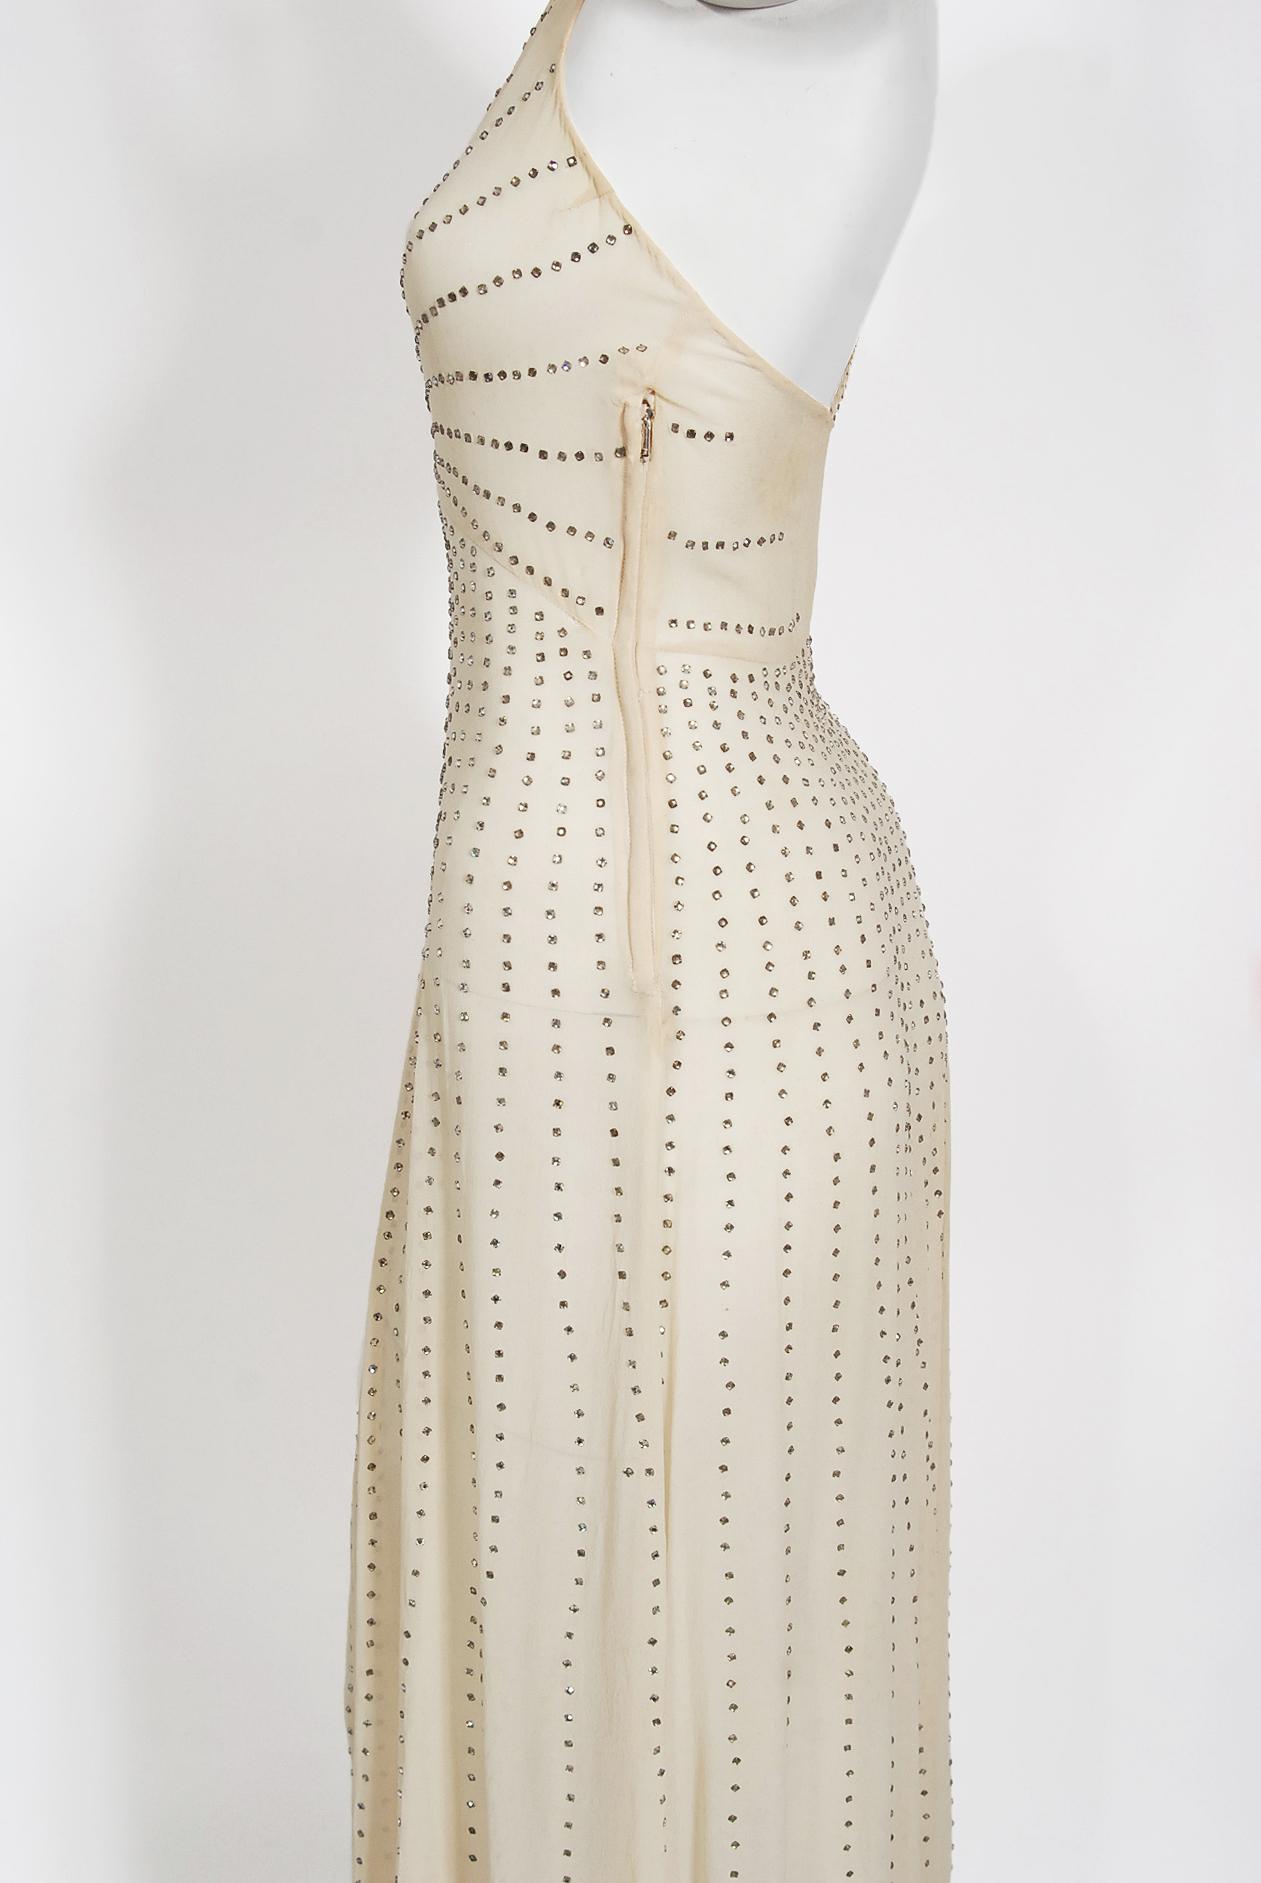 Vintage 1930's Rhinestone Studded Sheer Ivory Chiffon Bias-Cut Halter Dress Gown 2